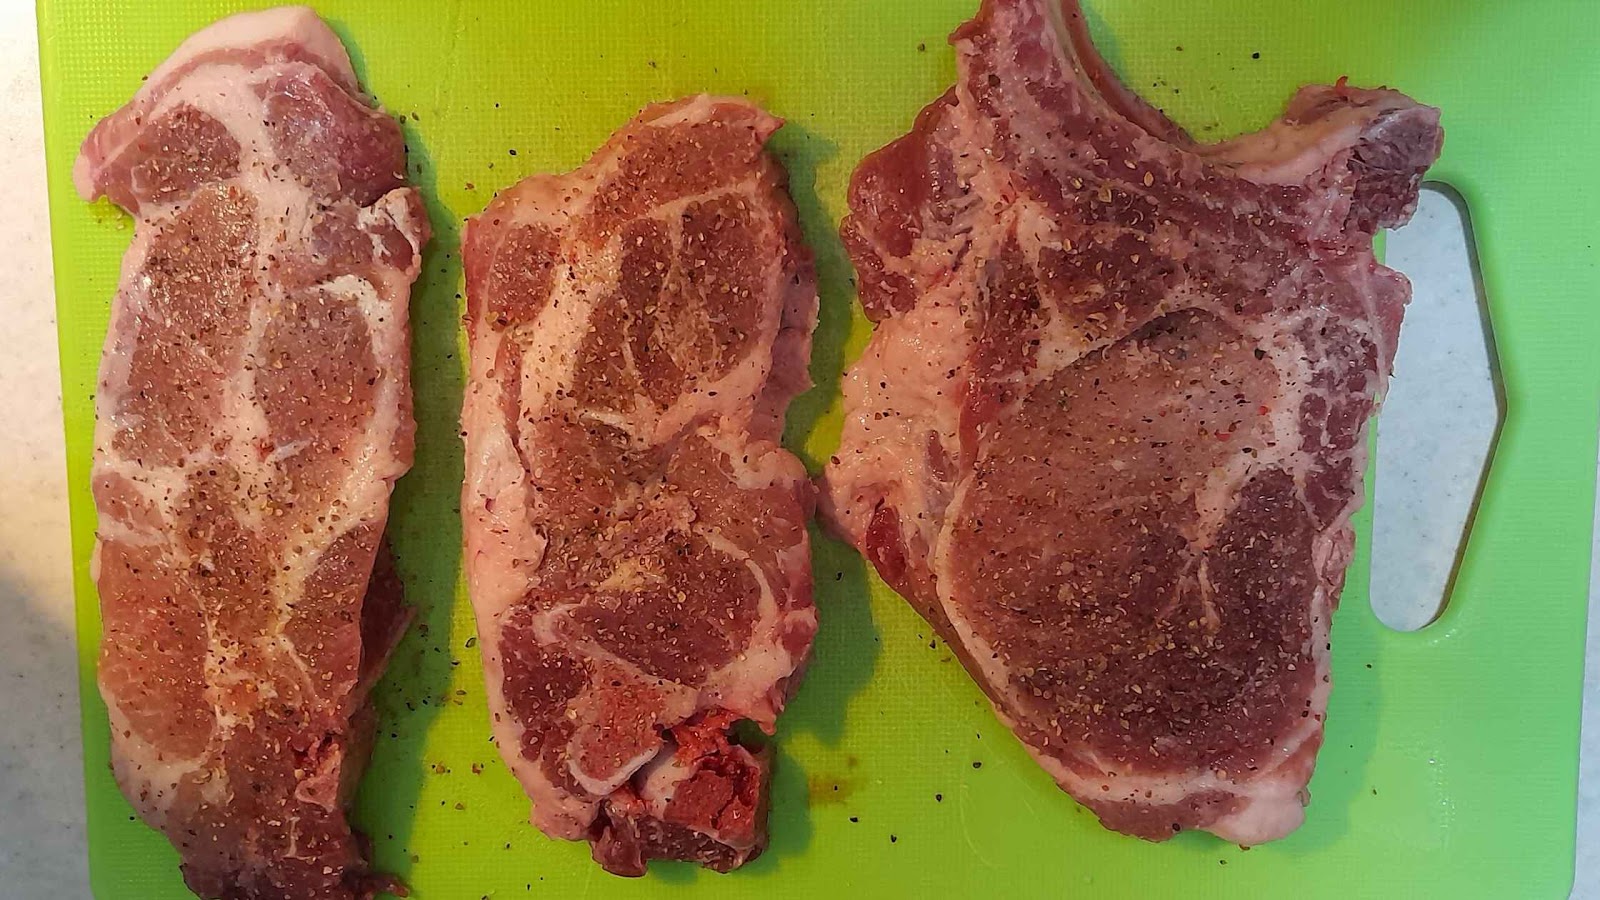 Lightly seasoned steaks to be tested.